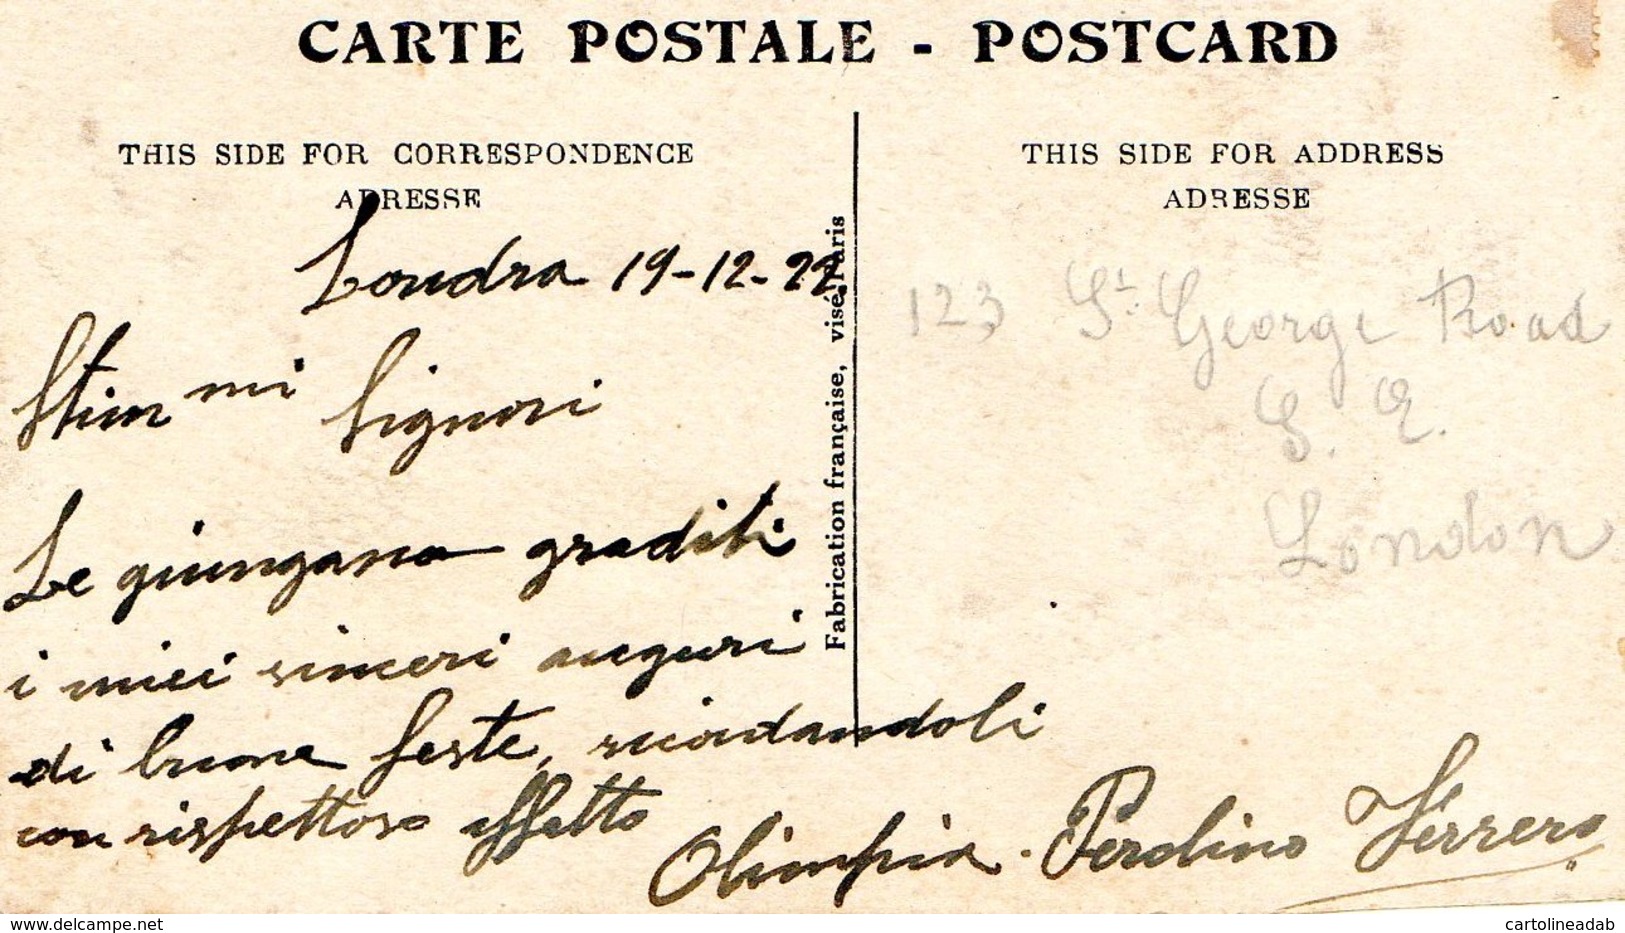 [DC7784] CPA - CARTOLINA RICAMATA IN RILIEVO - CHRISTMAS GREETINGS - Non Viaggiata 1922 - Old Postcard - Ricamate